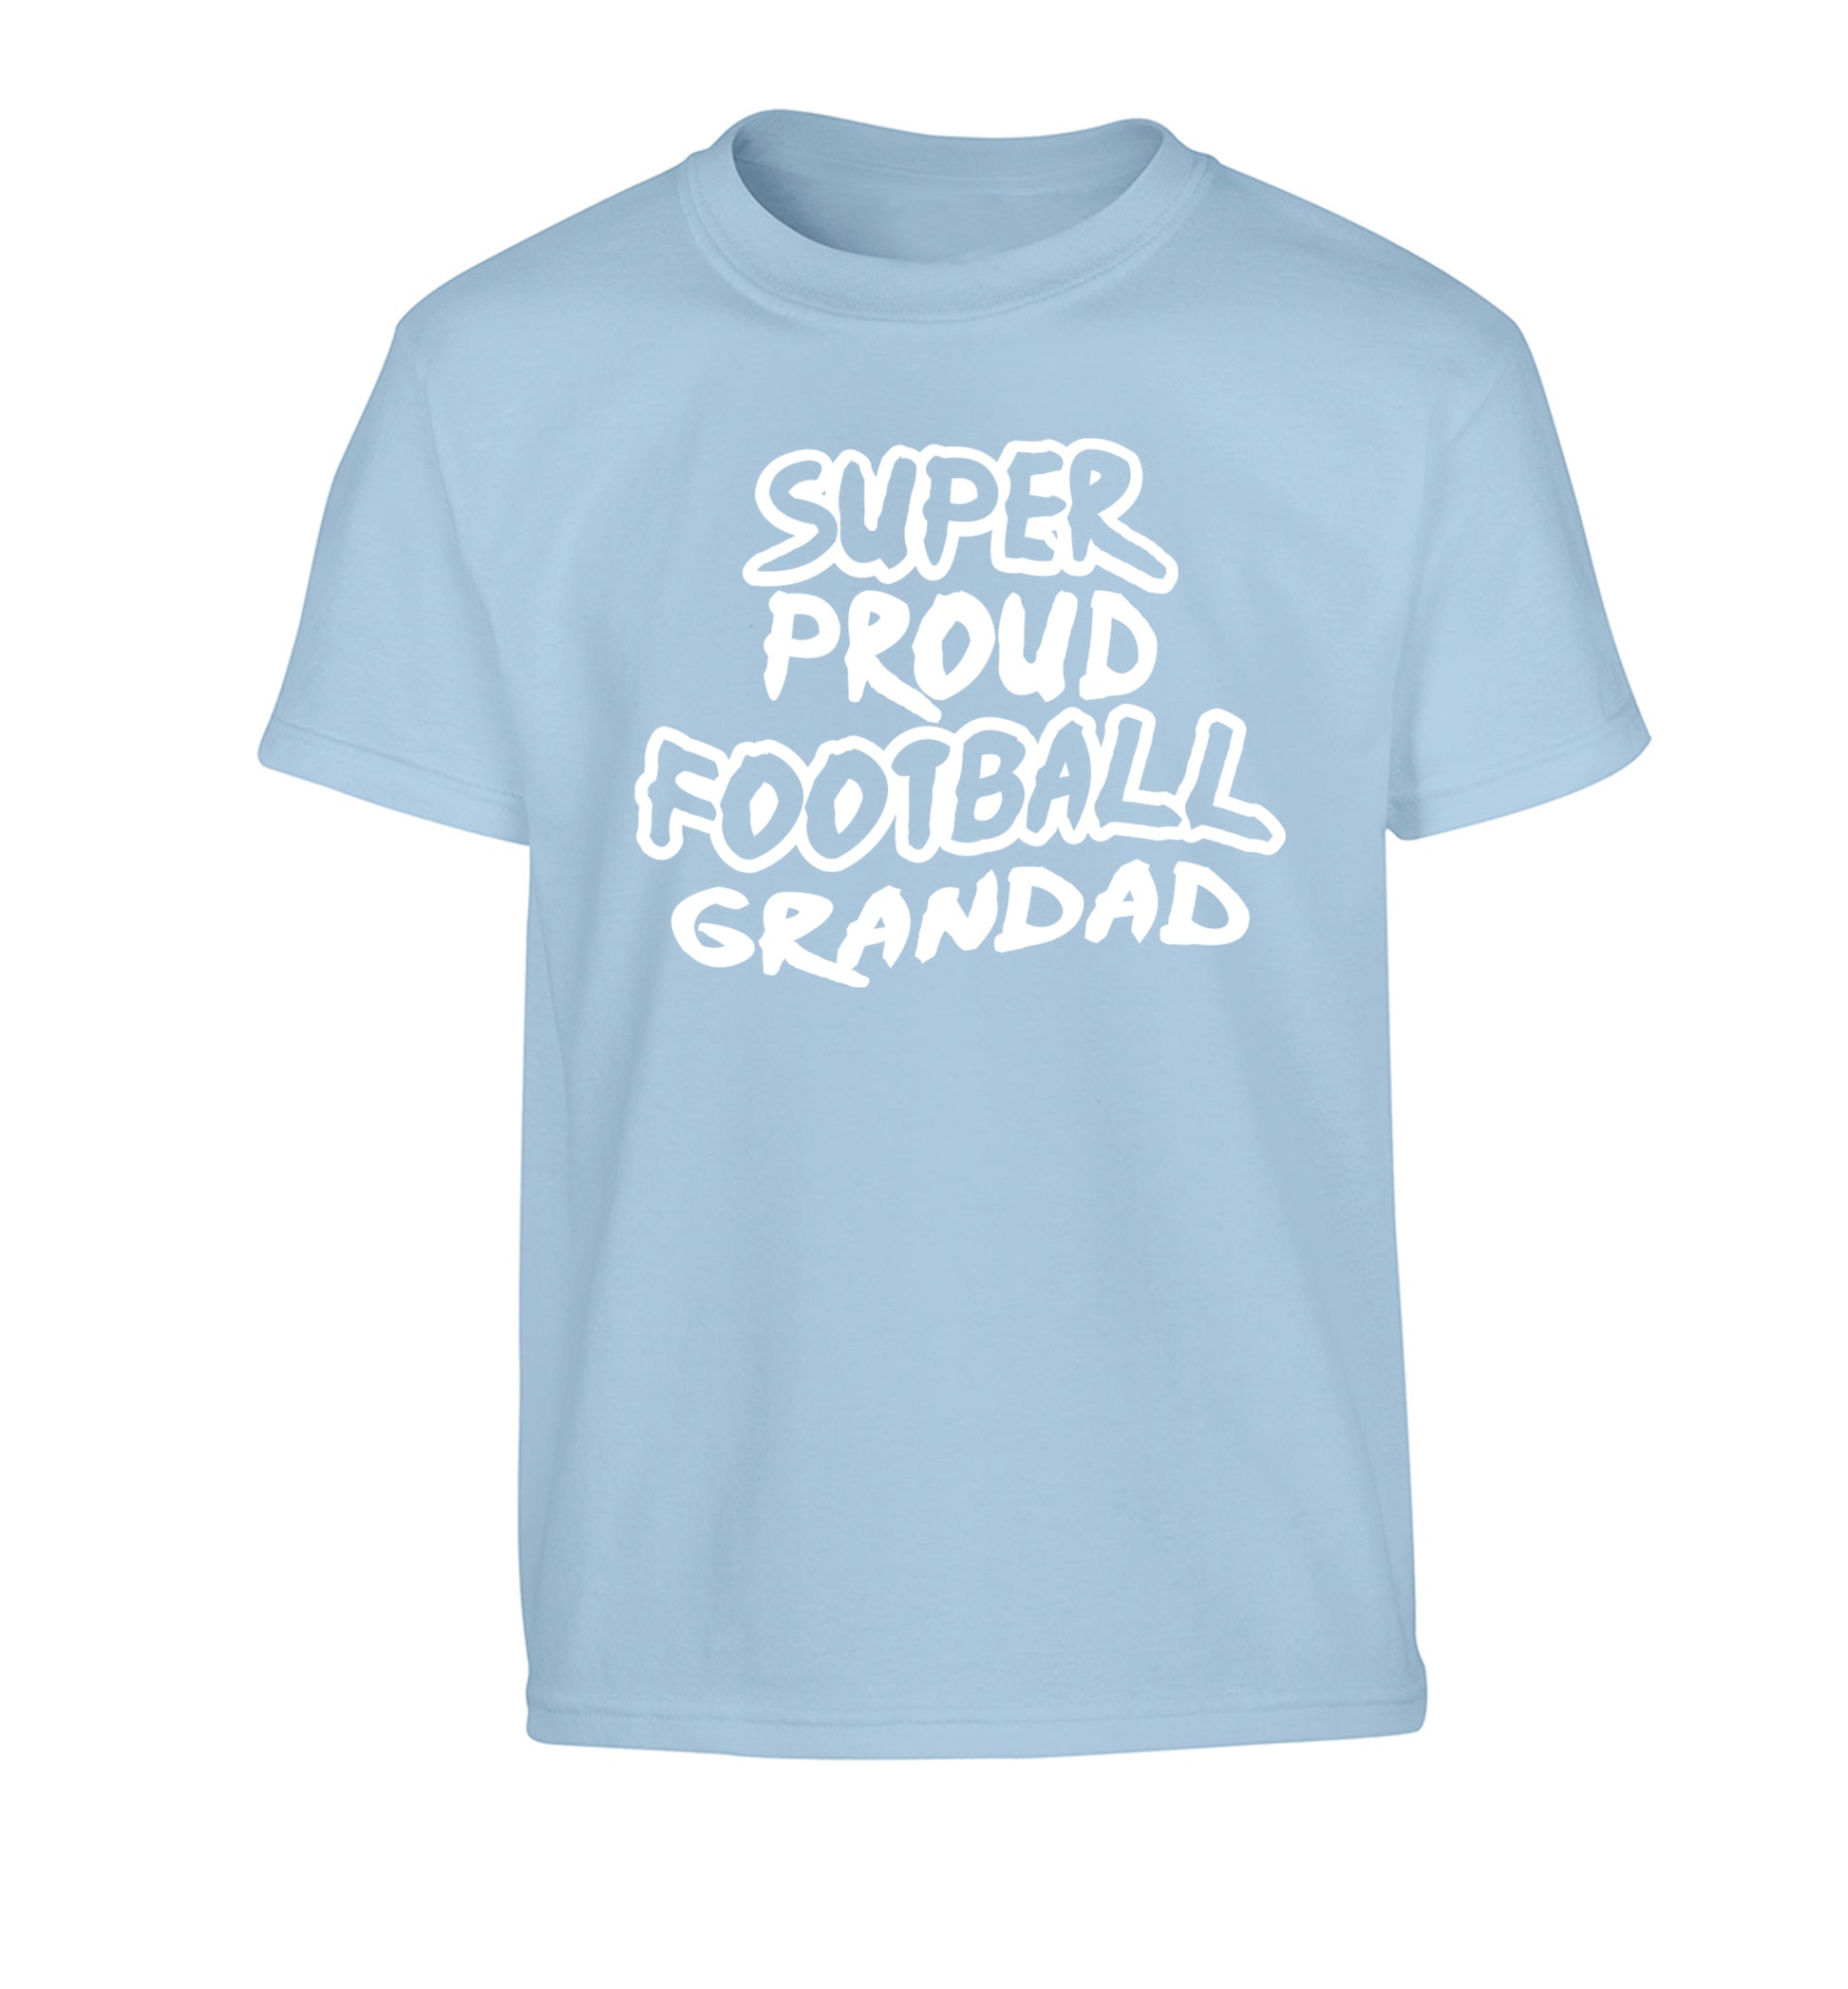 Super proud football grandad Children's light blue Tshirt 12-14 Years